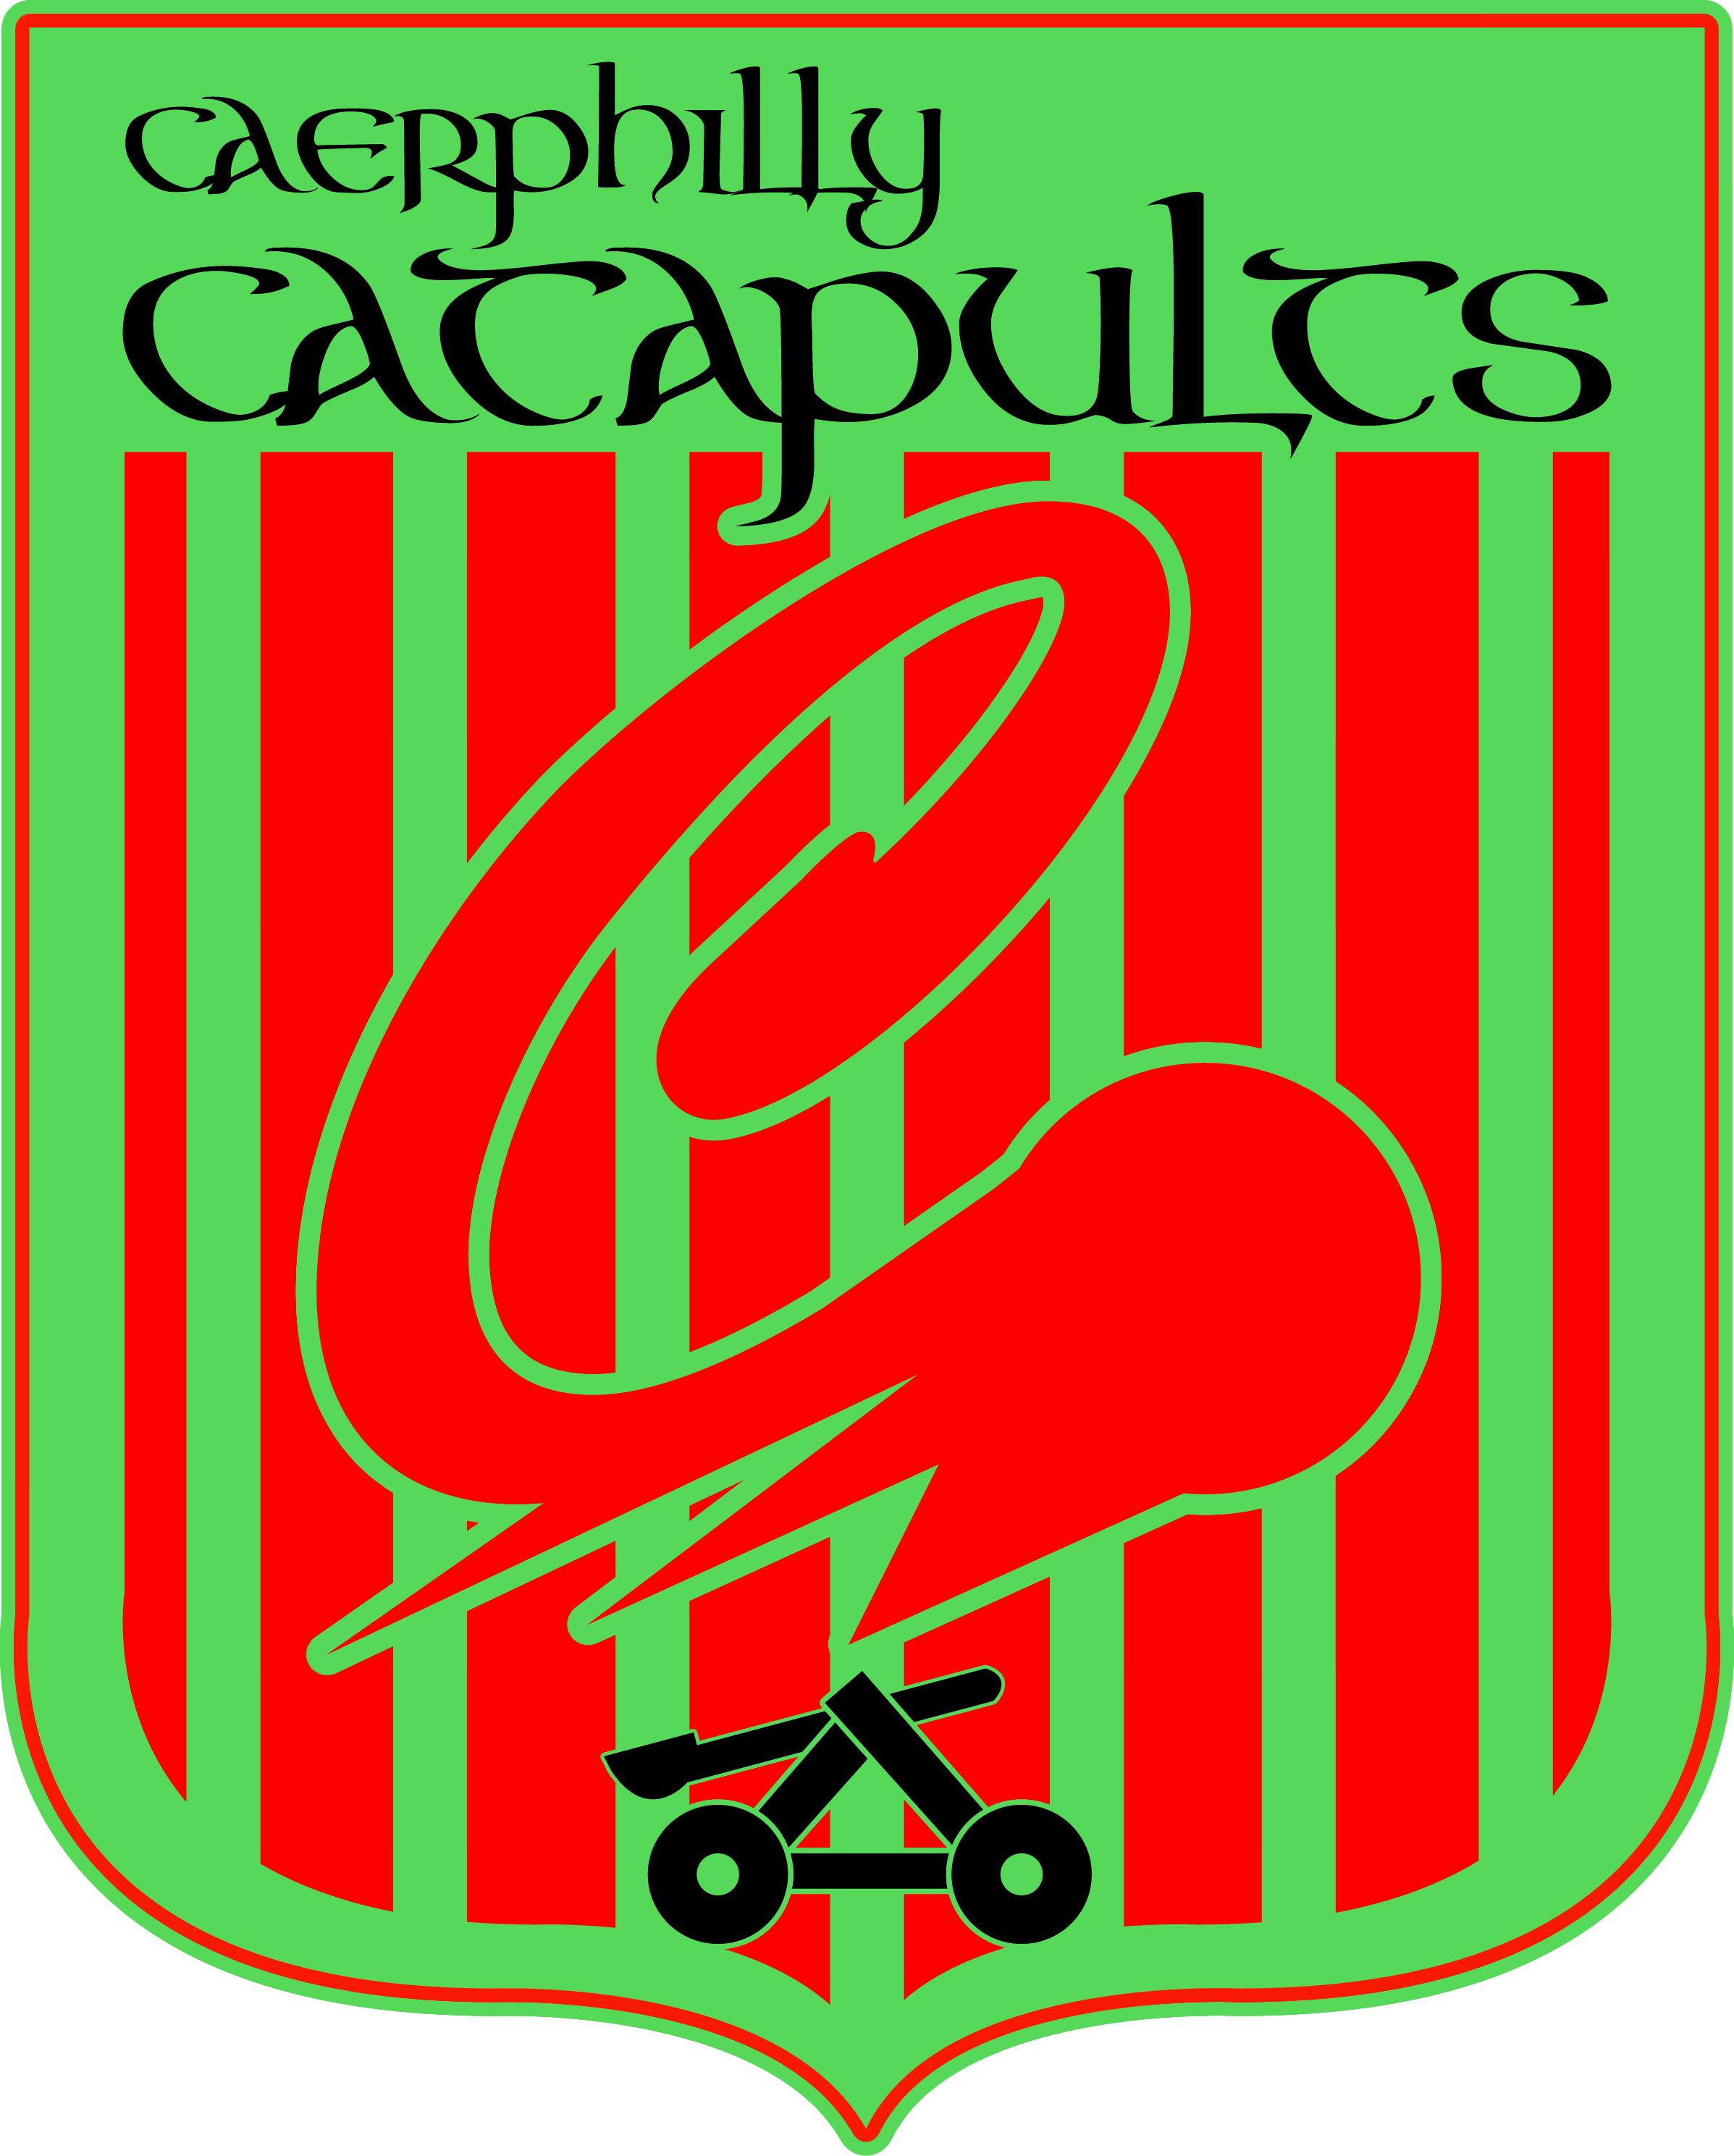 Caerphilly Catapults logo 1